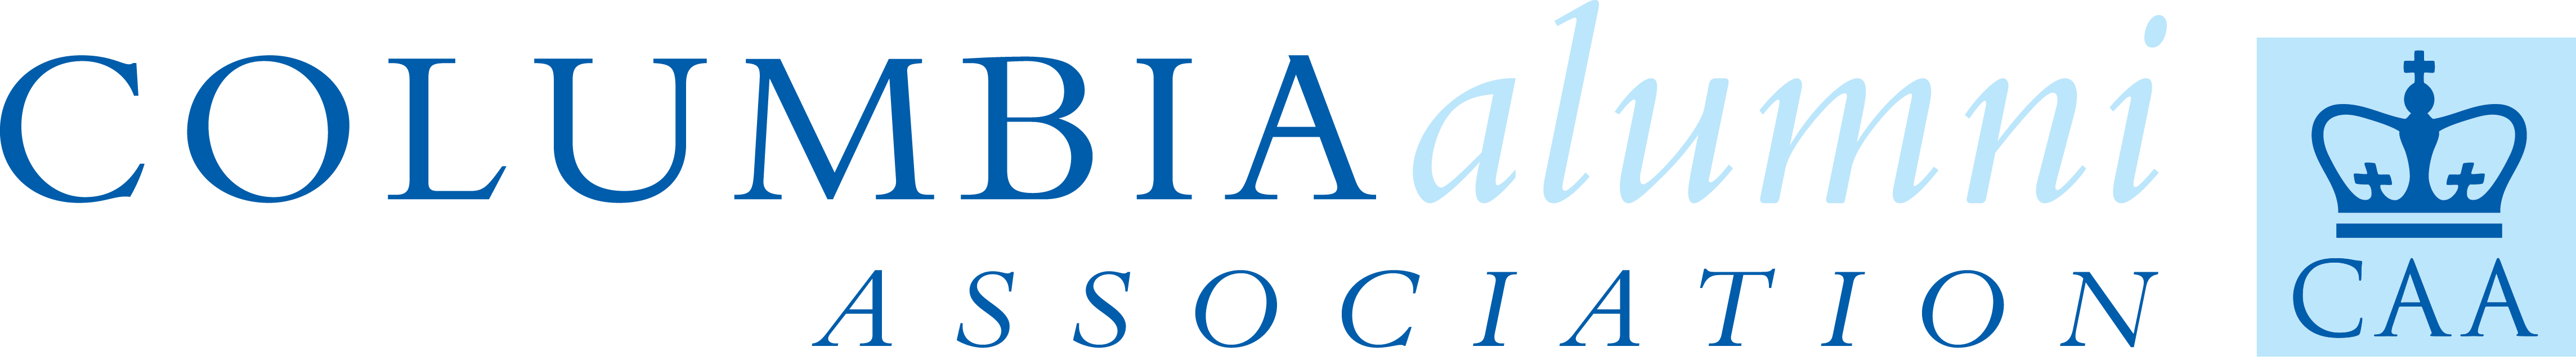 Columbia Alumni Association